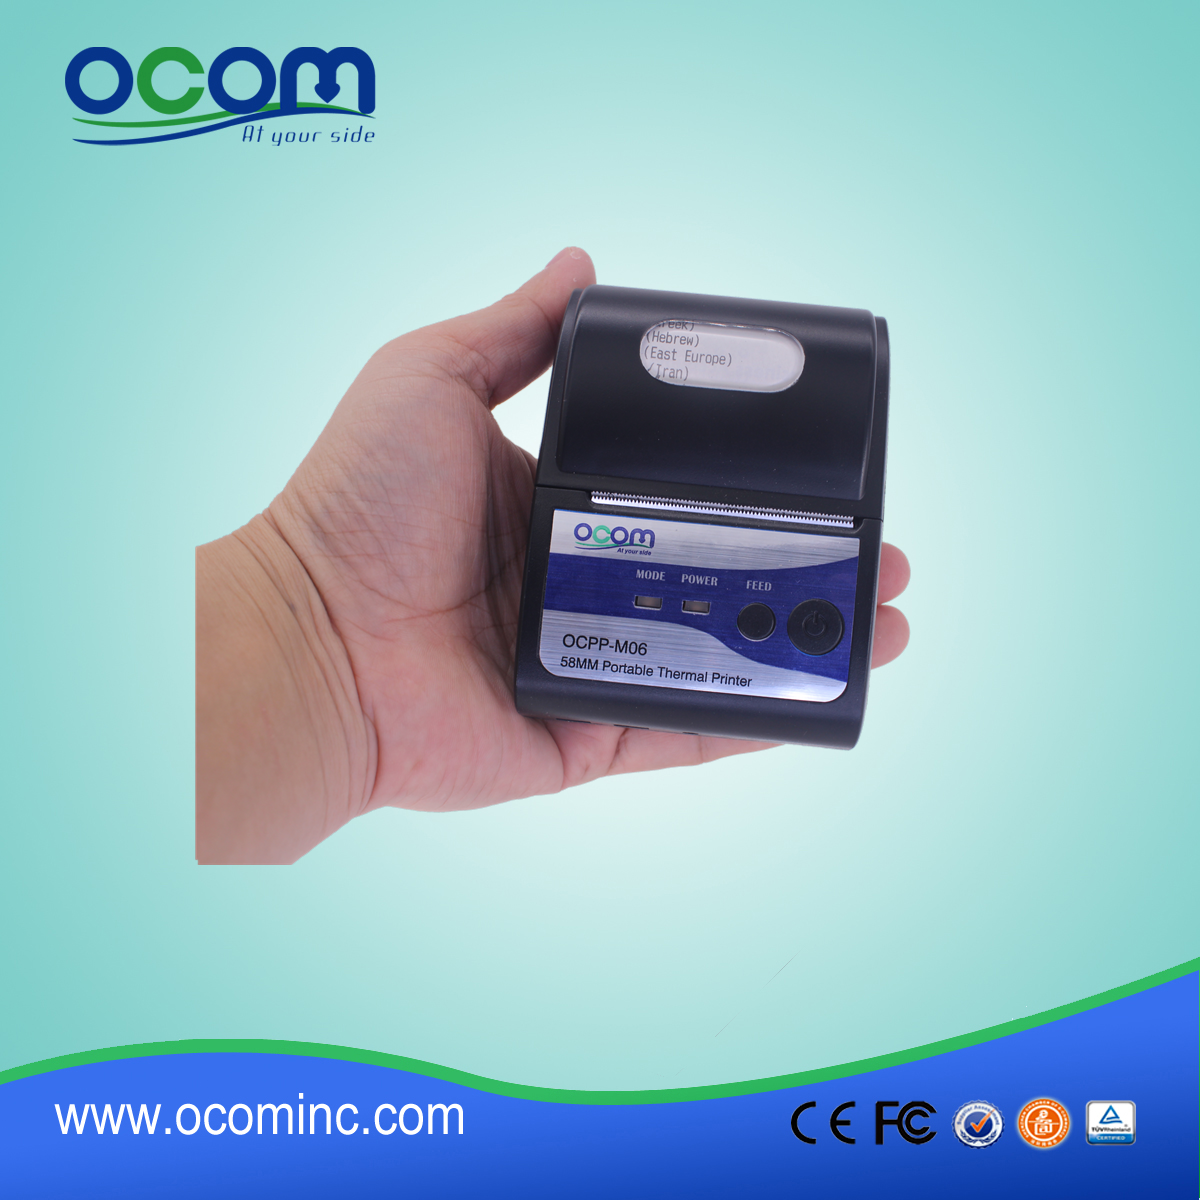 (OCPP-Μ06) OCOM Hot 58 χιλιοστά πώλησης θερμικό εκτυπωτή παραλαβή